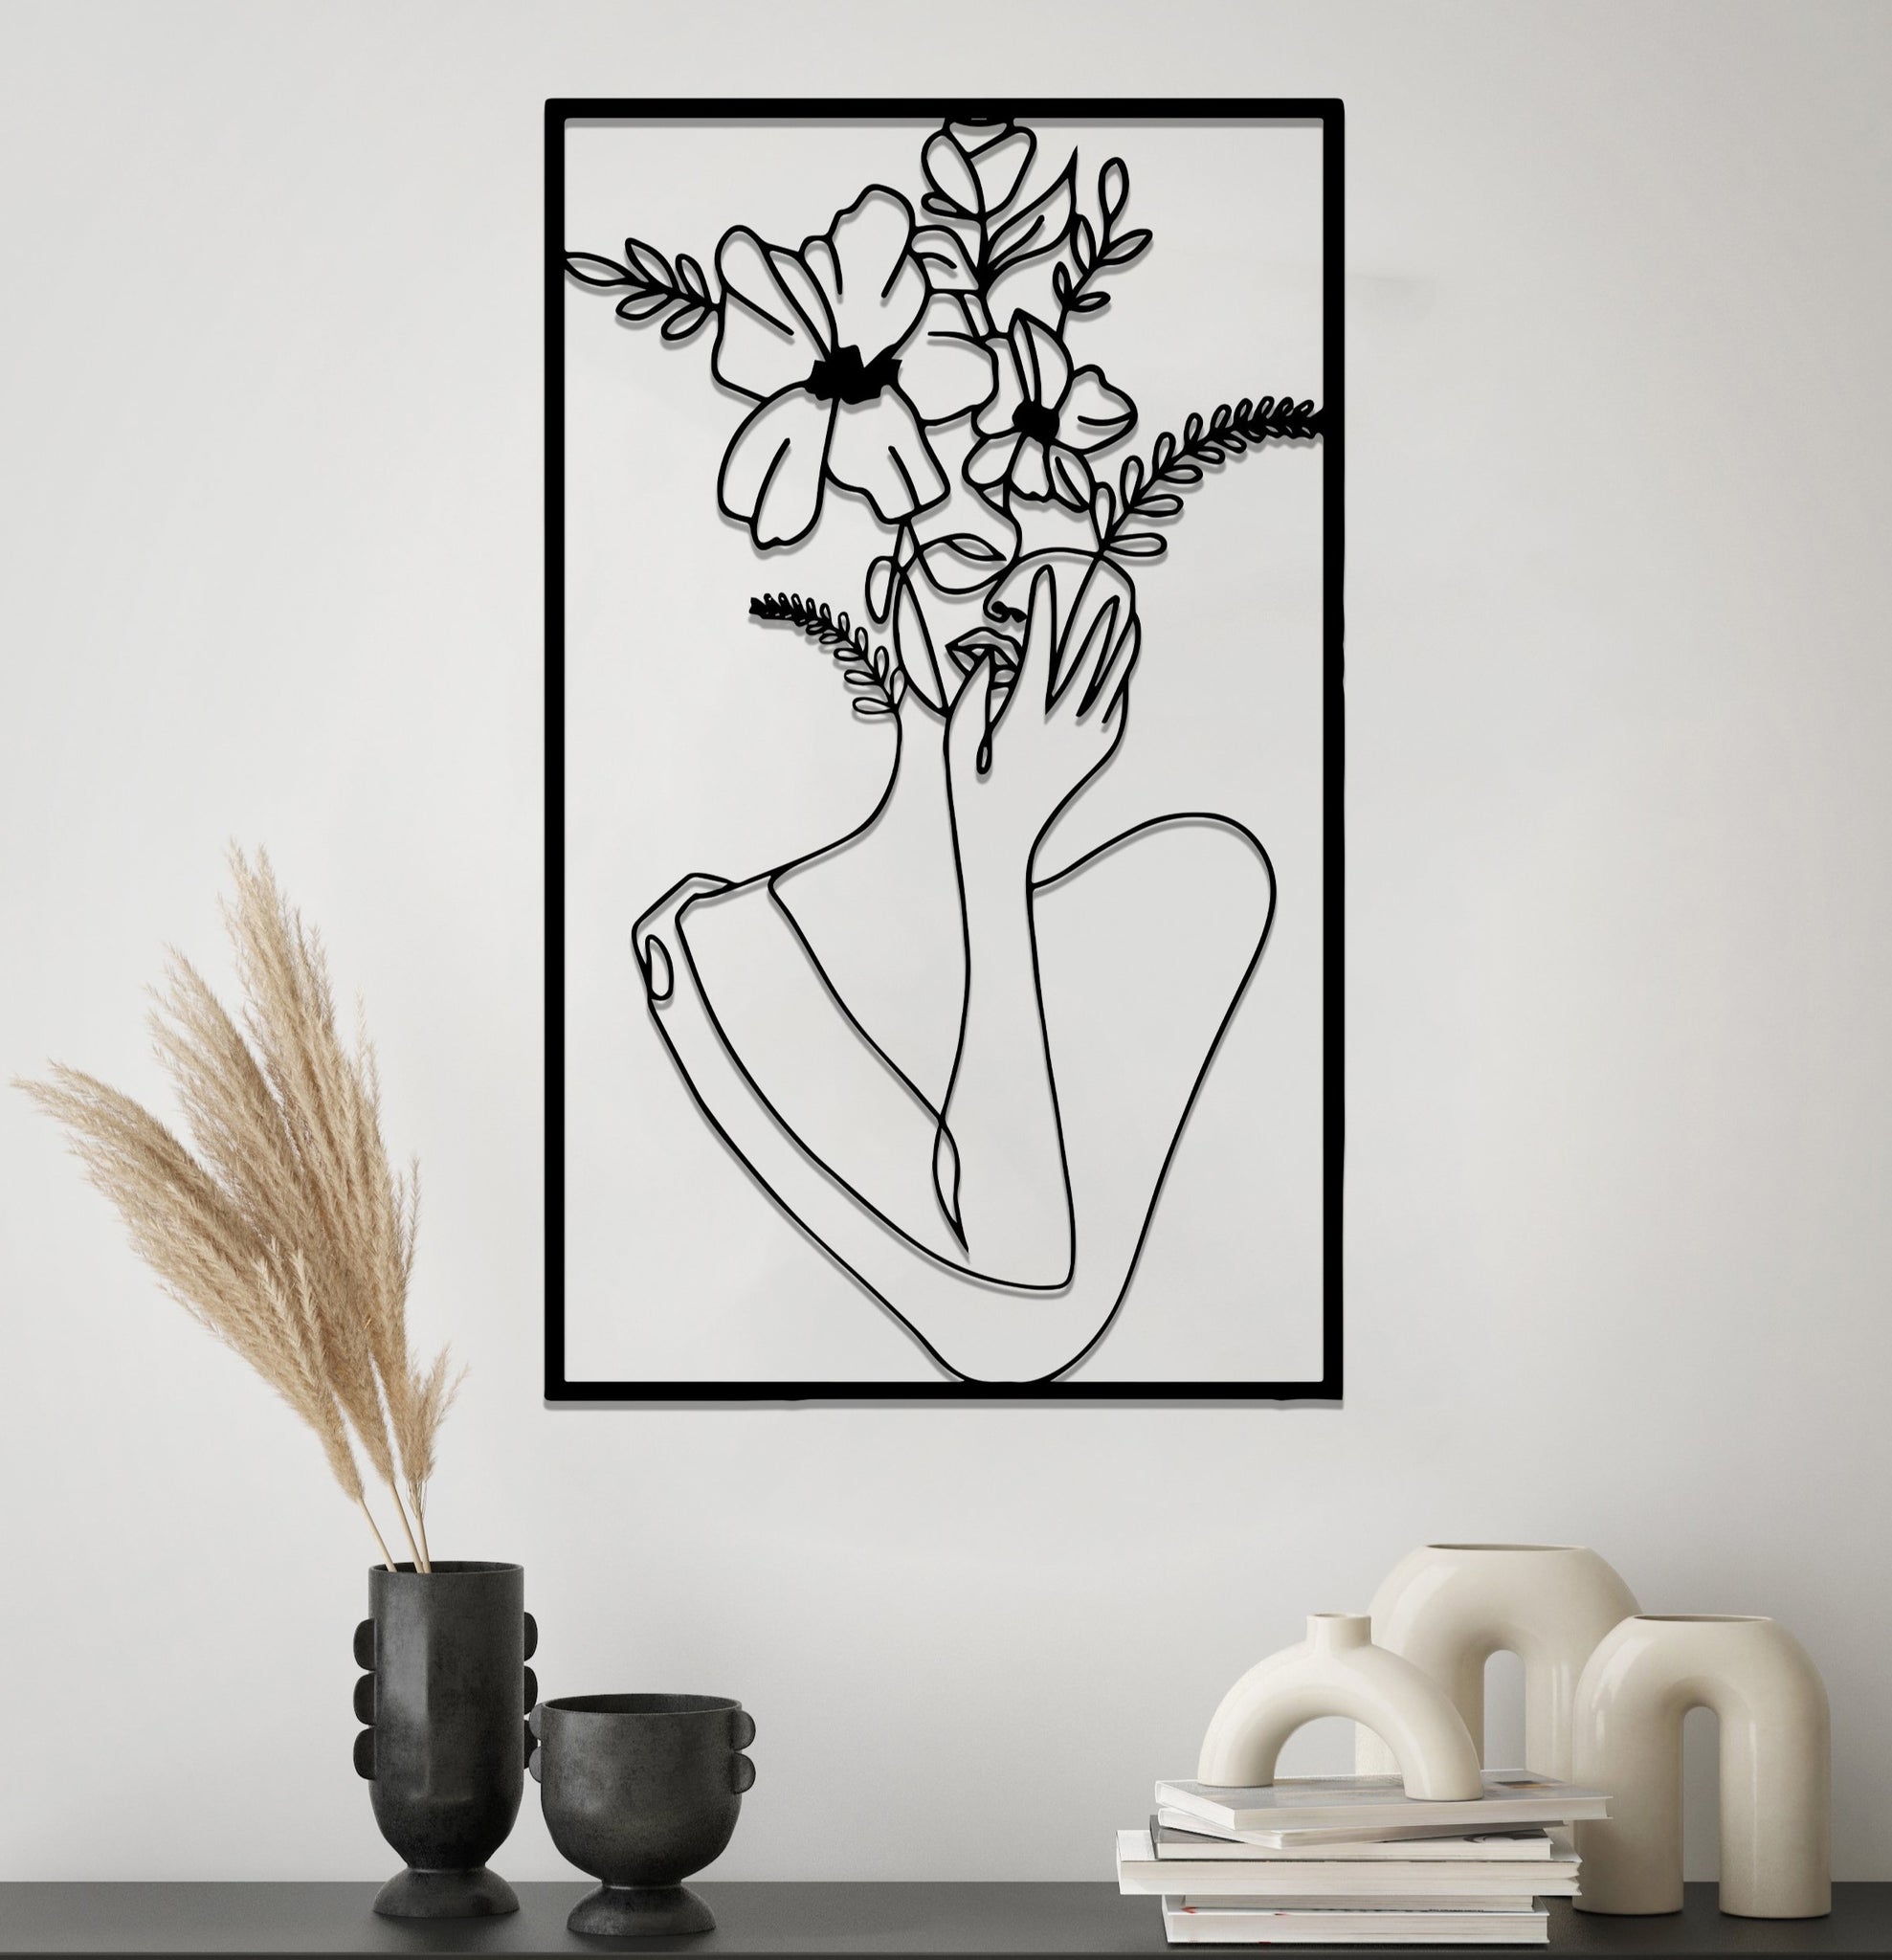 Дерев'яна дизайнерська картина "Vase" (50 x 30 см)